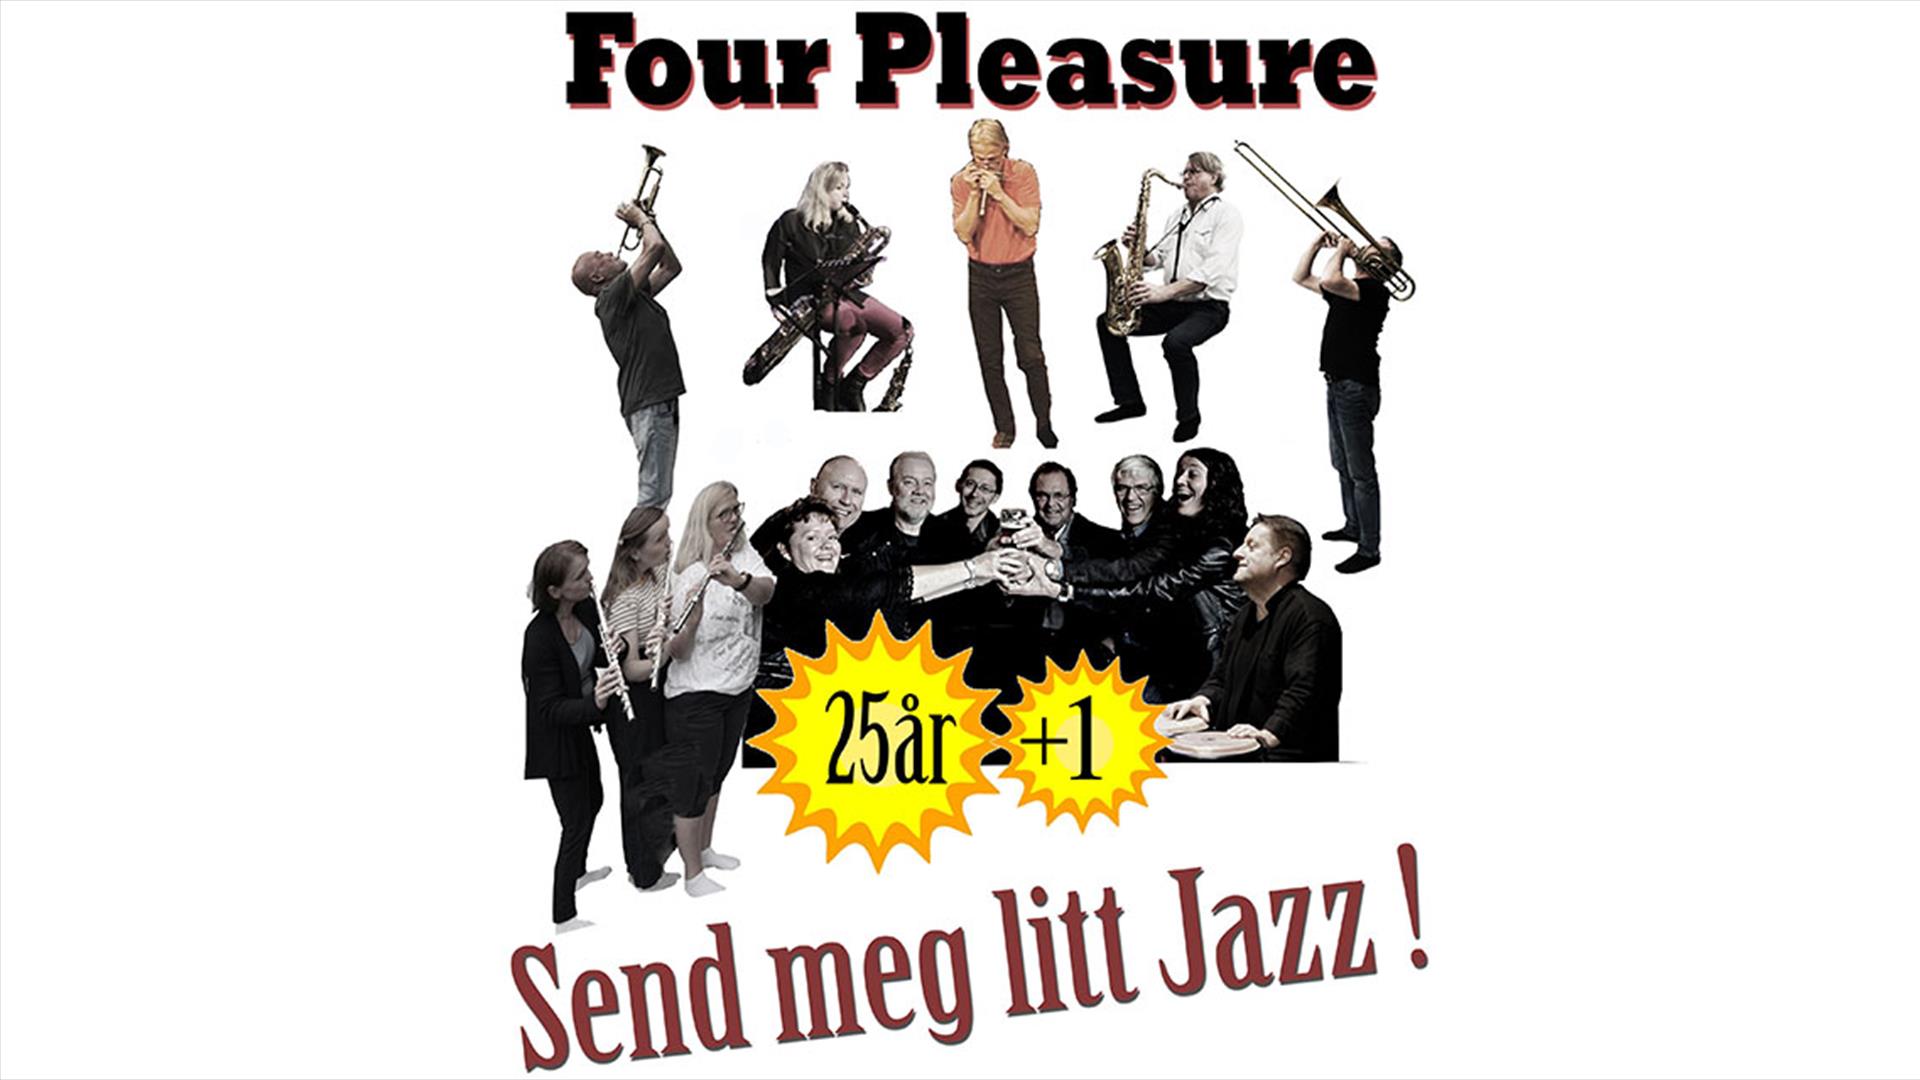 Four Pleasure - Send meg litt Jazz